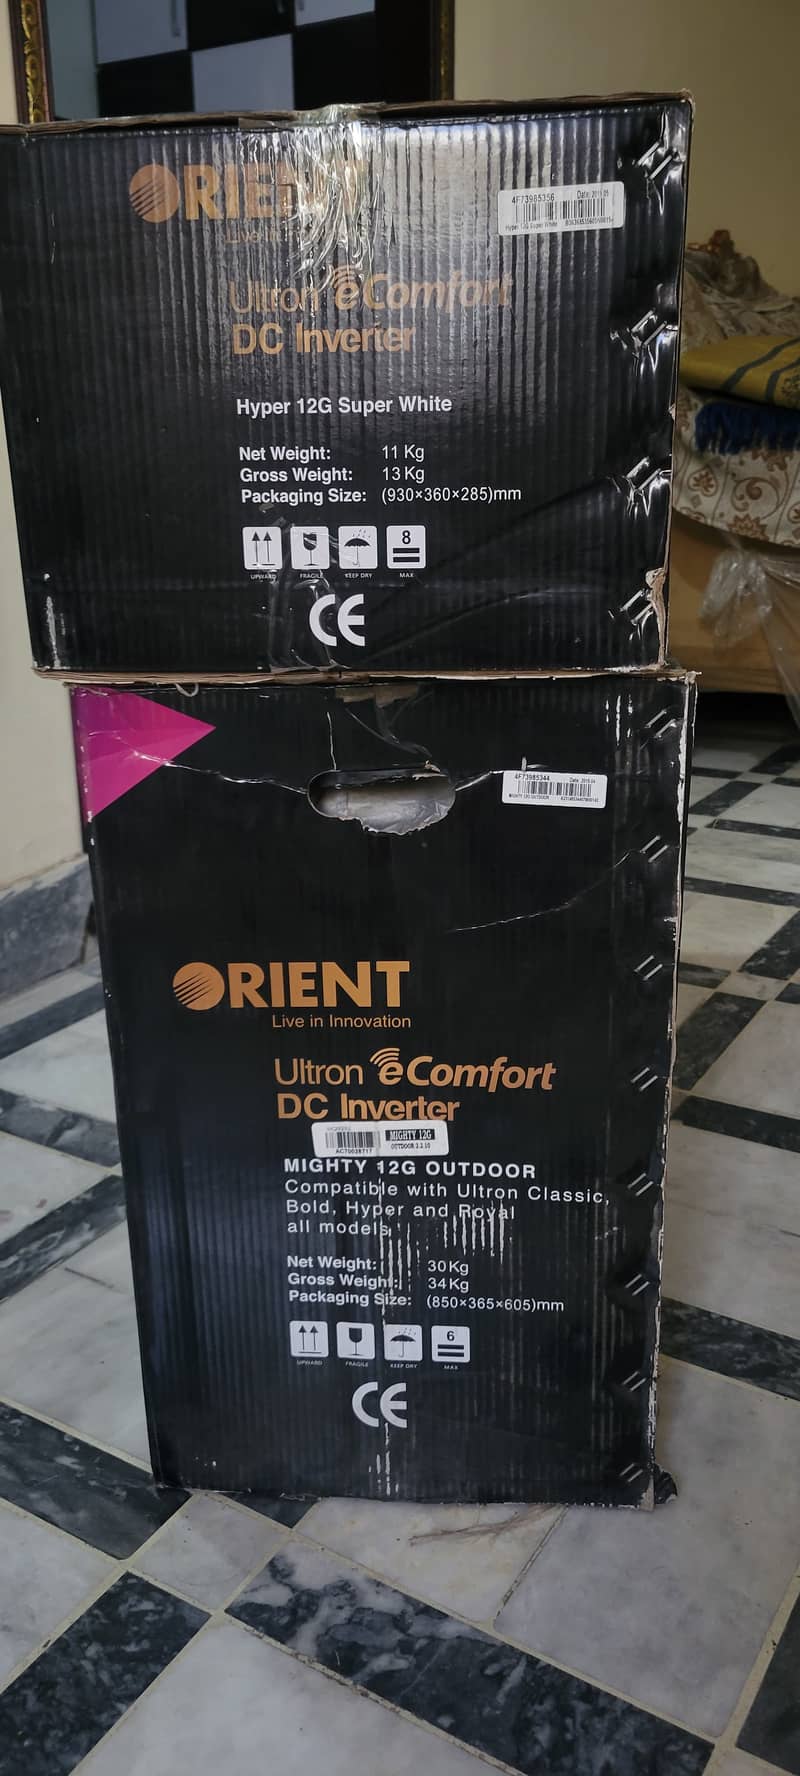 Orient Ultron e Comfort DC Invertor 1 Ton Air Conditioner Brand New 2